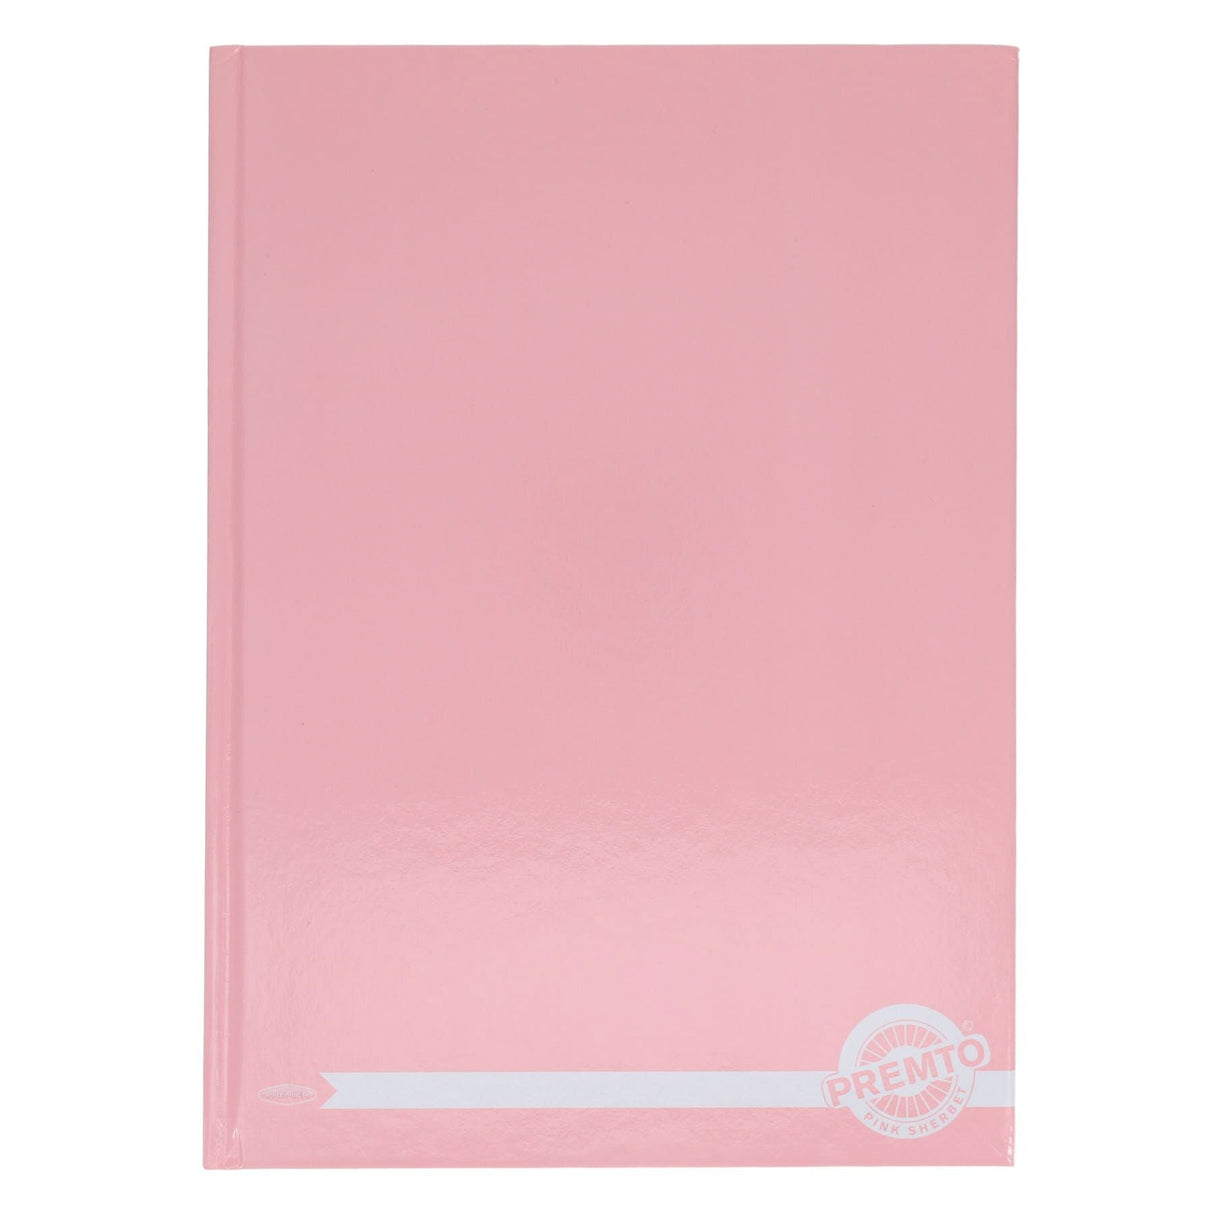 Premto Pastel A4 Hardcover Notebook - 160 Pages - Pink Sherbet-A4 Notebooks-Premto|StationeryShop.co.uk